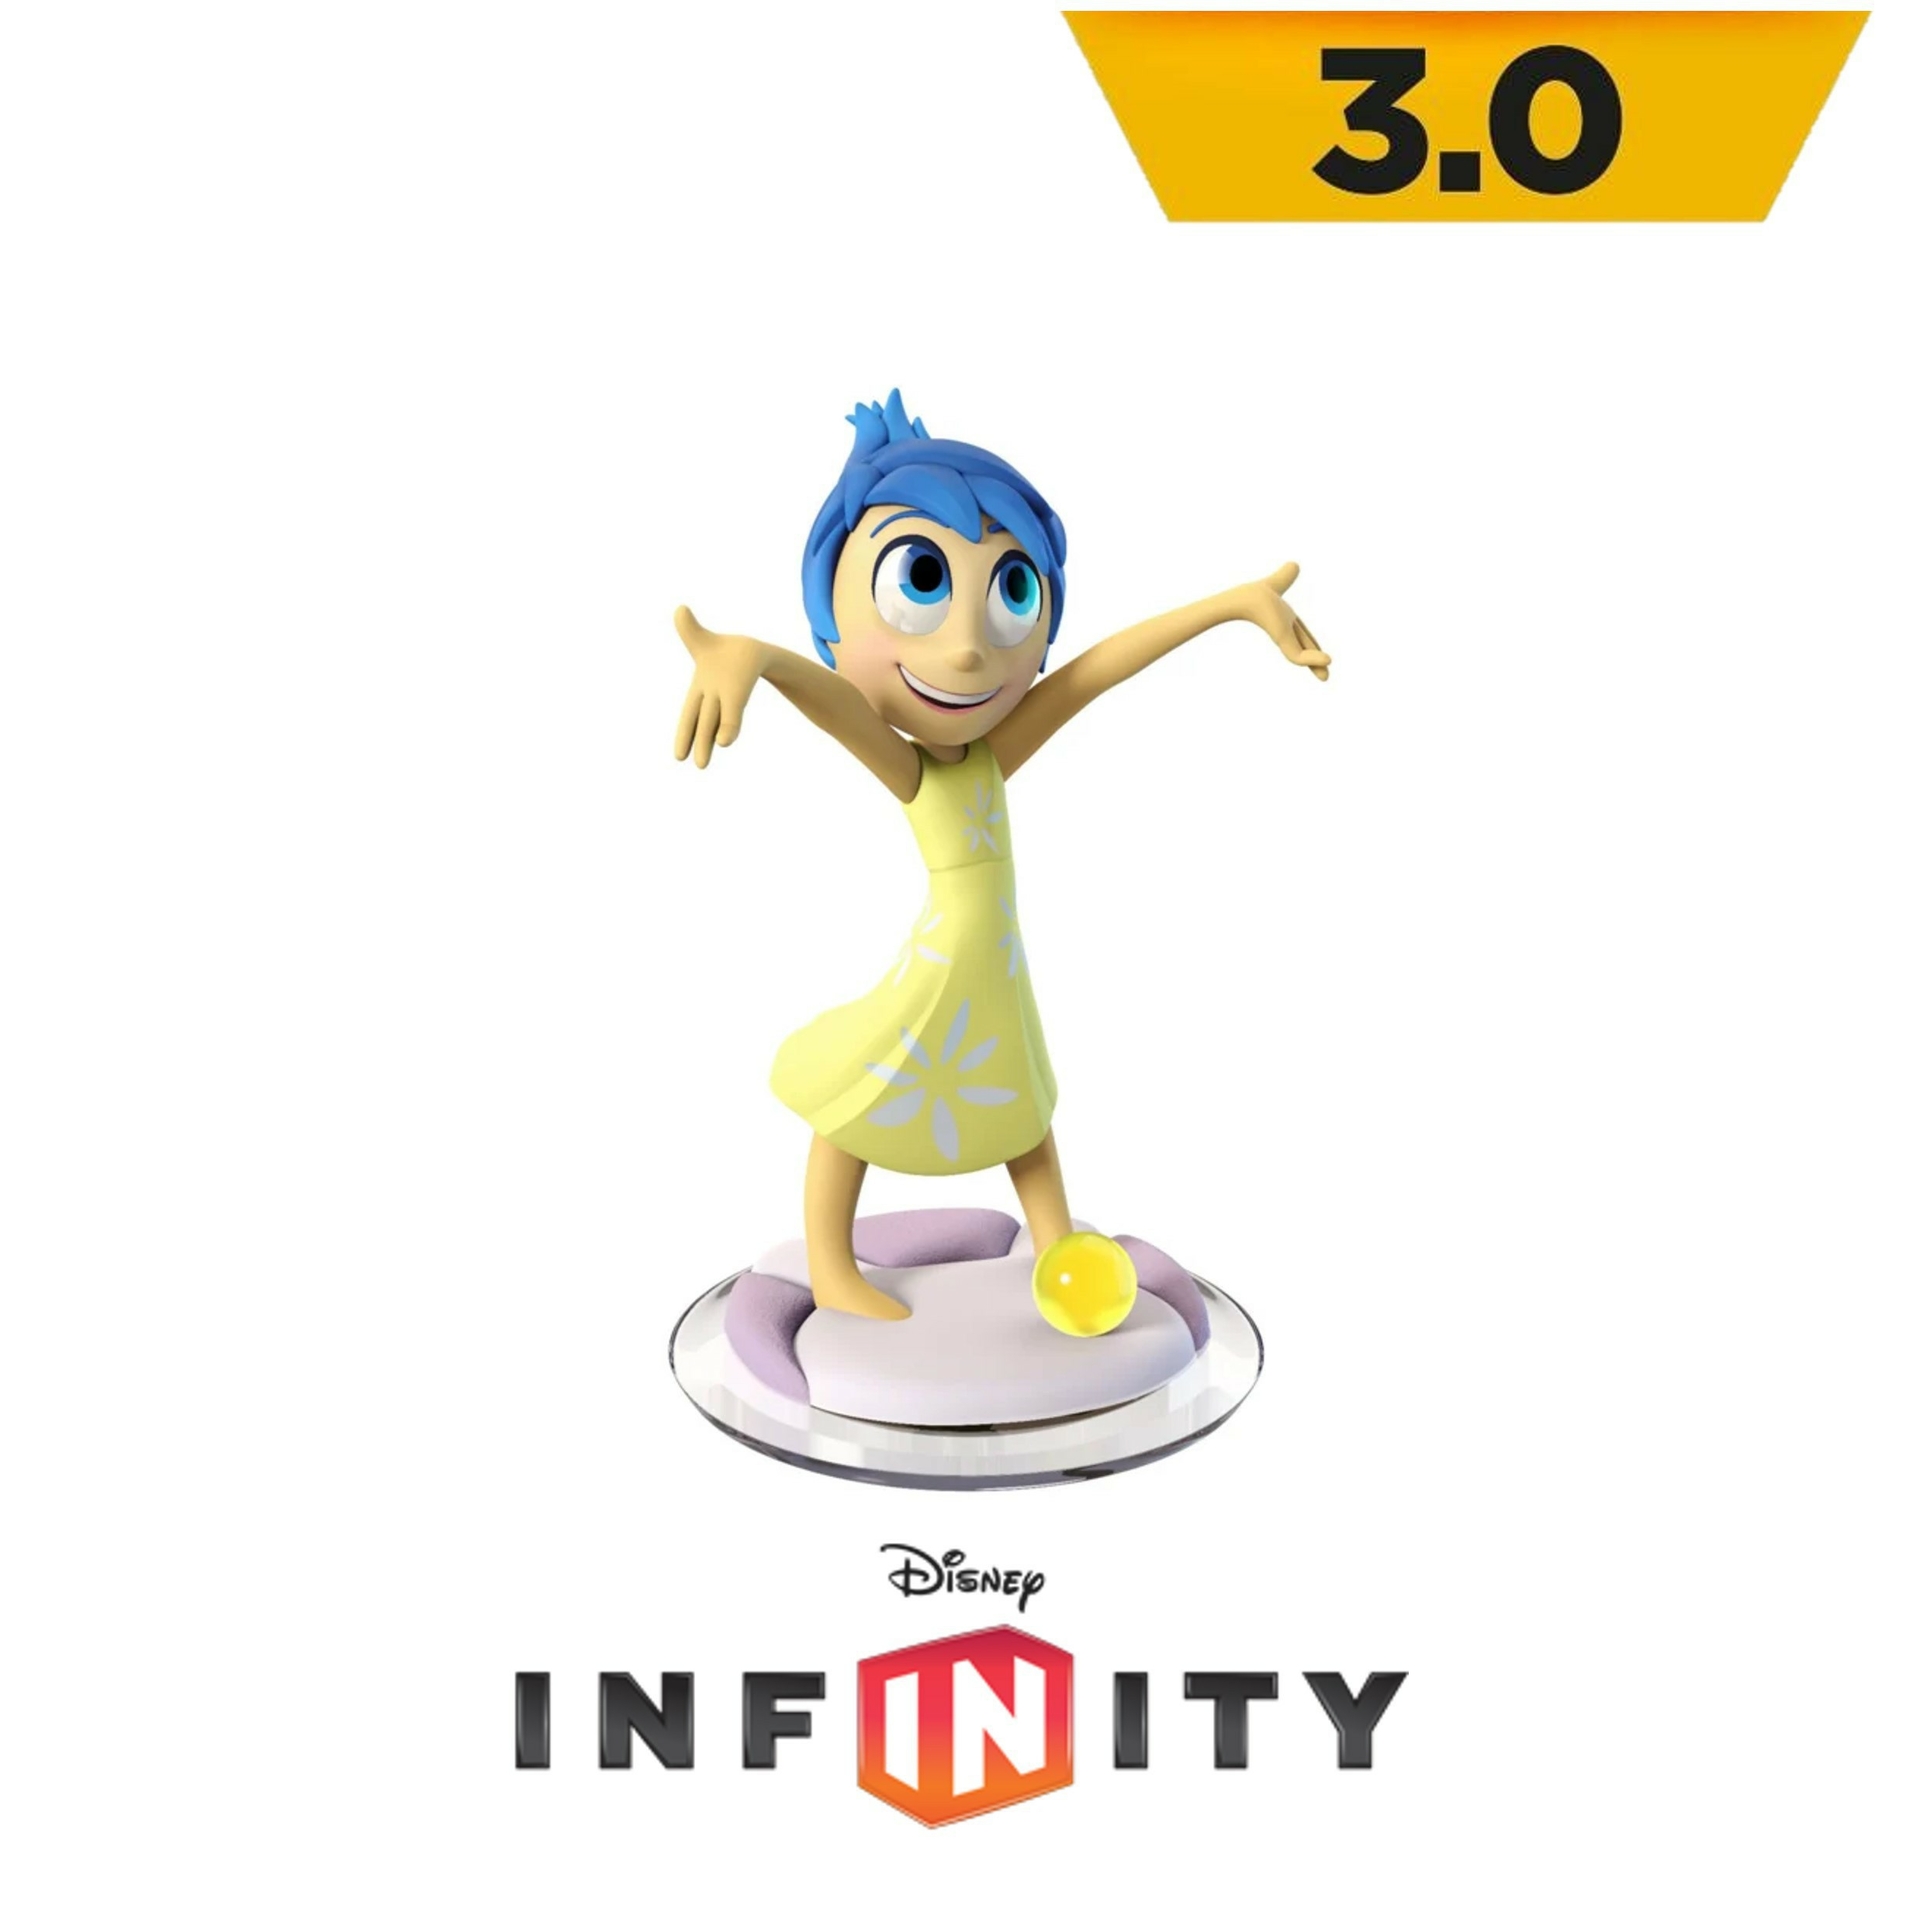 Disney Infinity - Joy - Xbox 360 Hardware